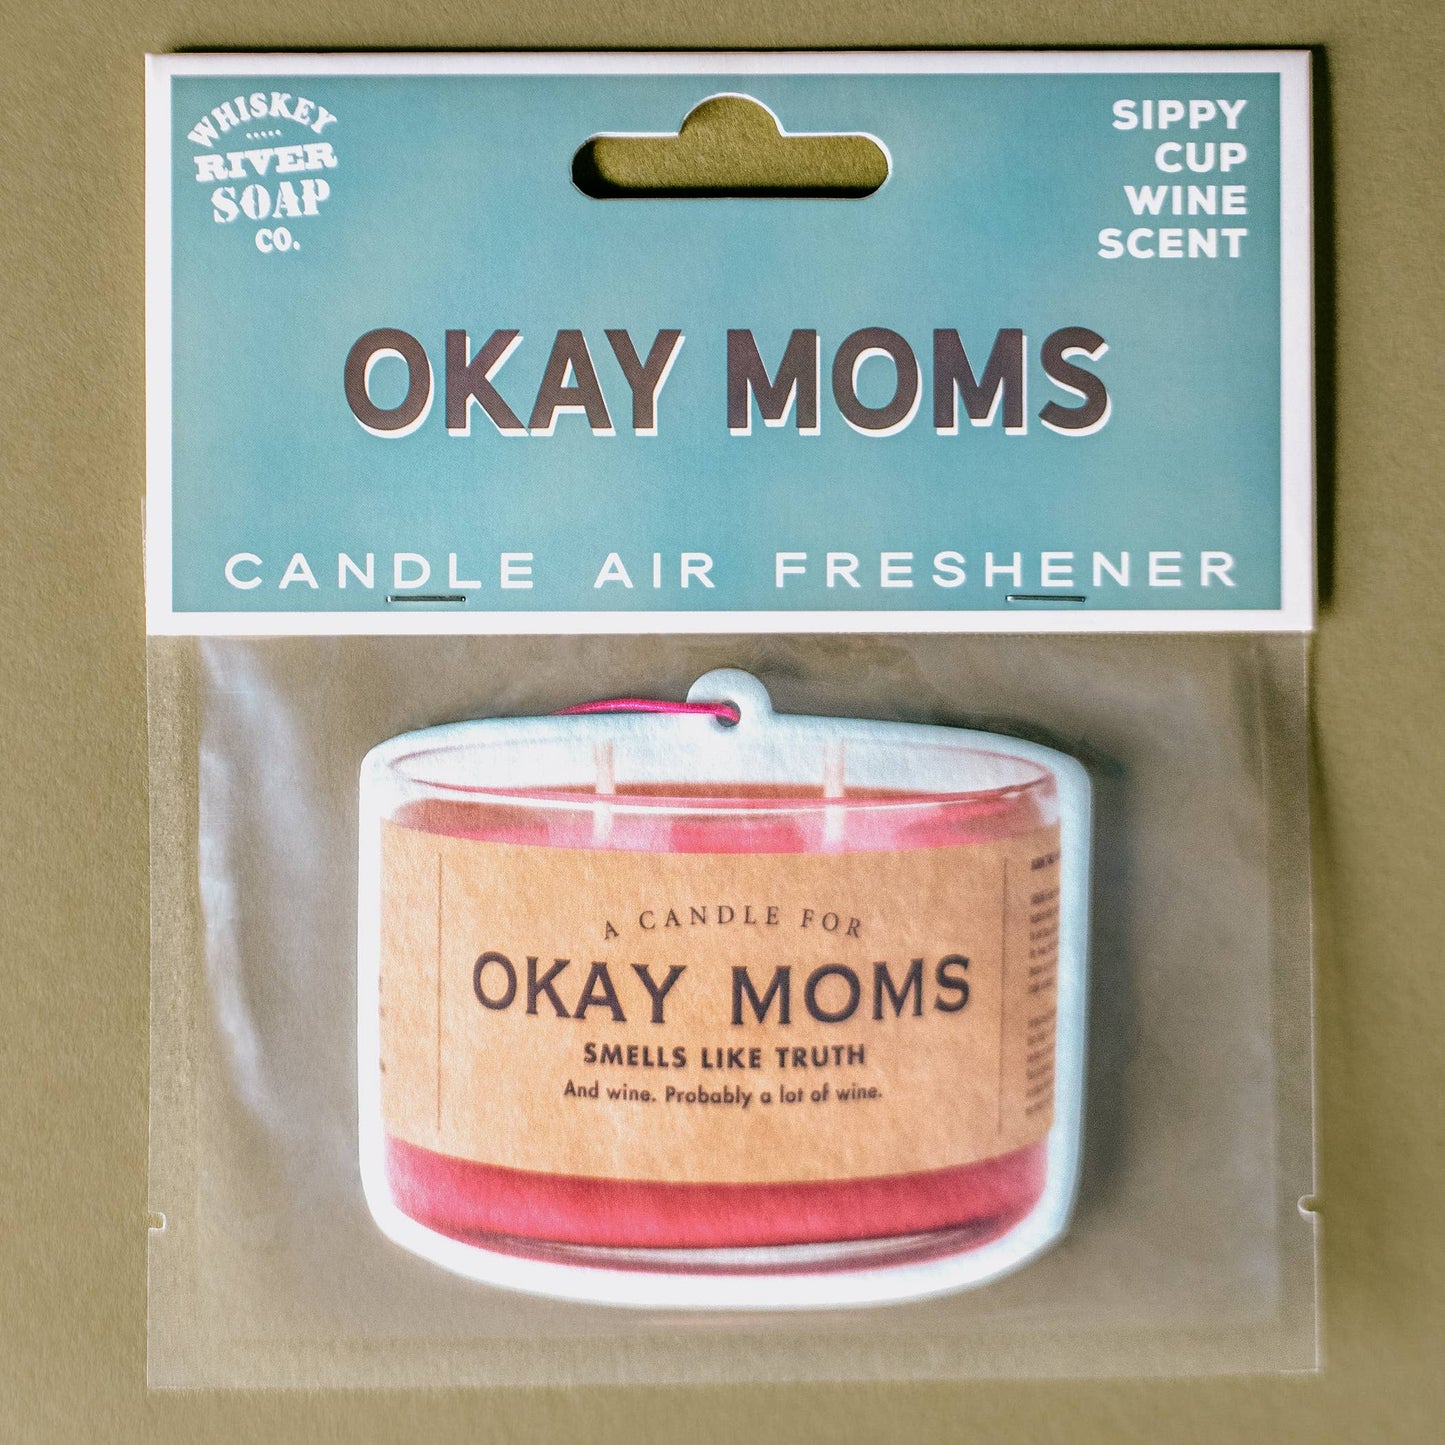 Whiskey River Soap Co. - Okay Moms Air Freshener | Funny Car Air Freshener